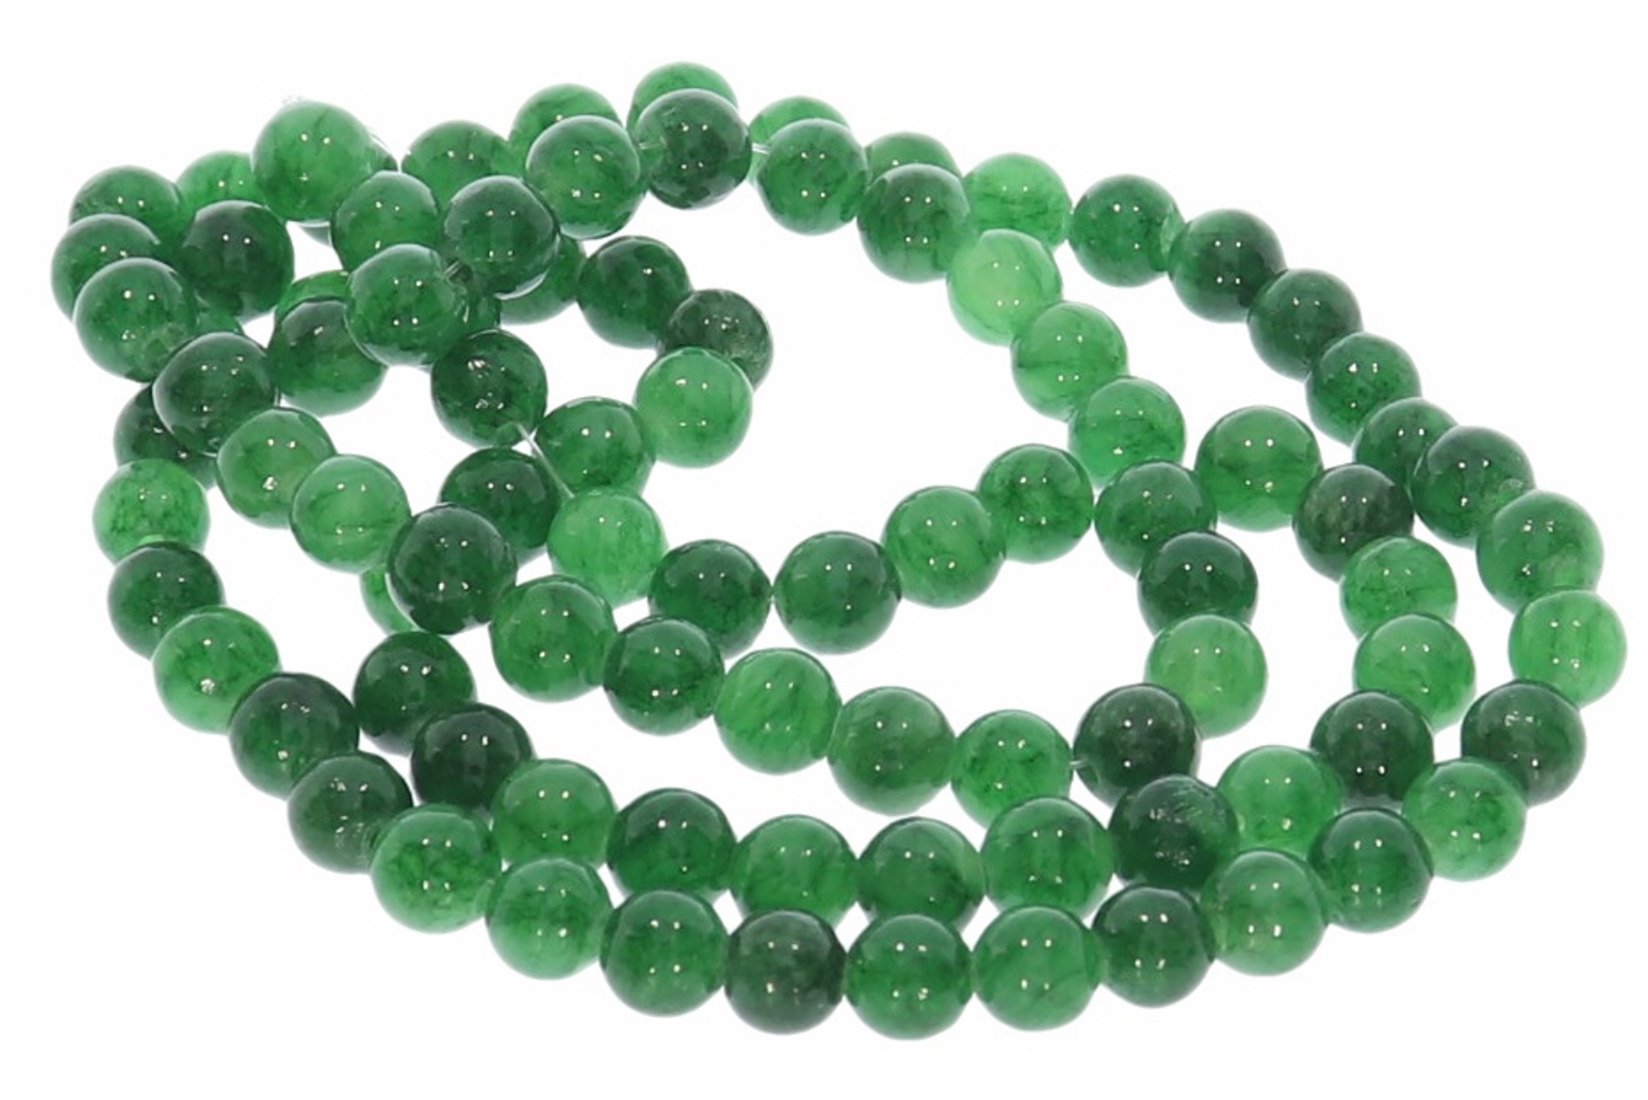 4S220 - Mashan Jade grün 4mm  Strang Mineralien Edelstein